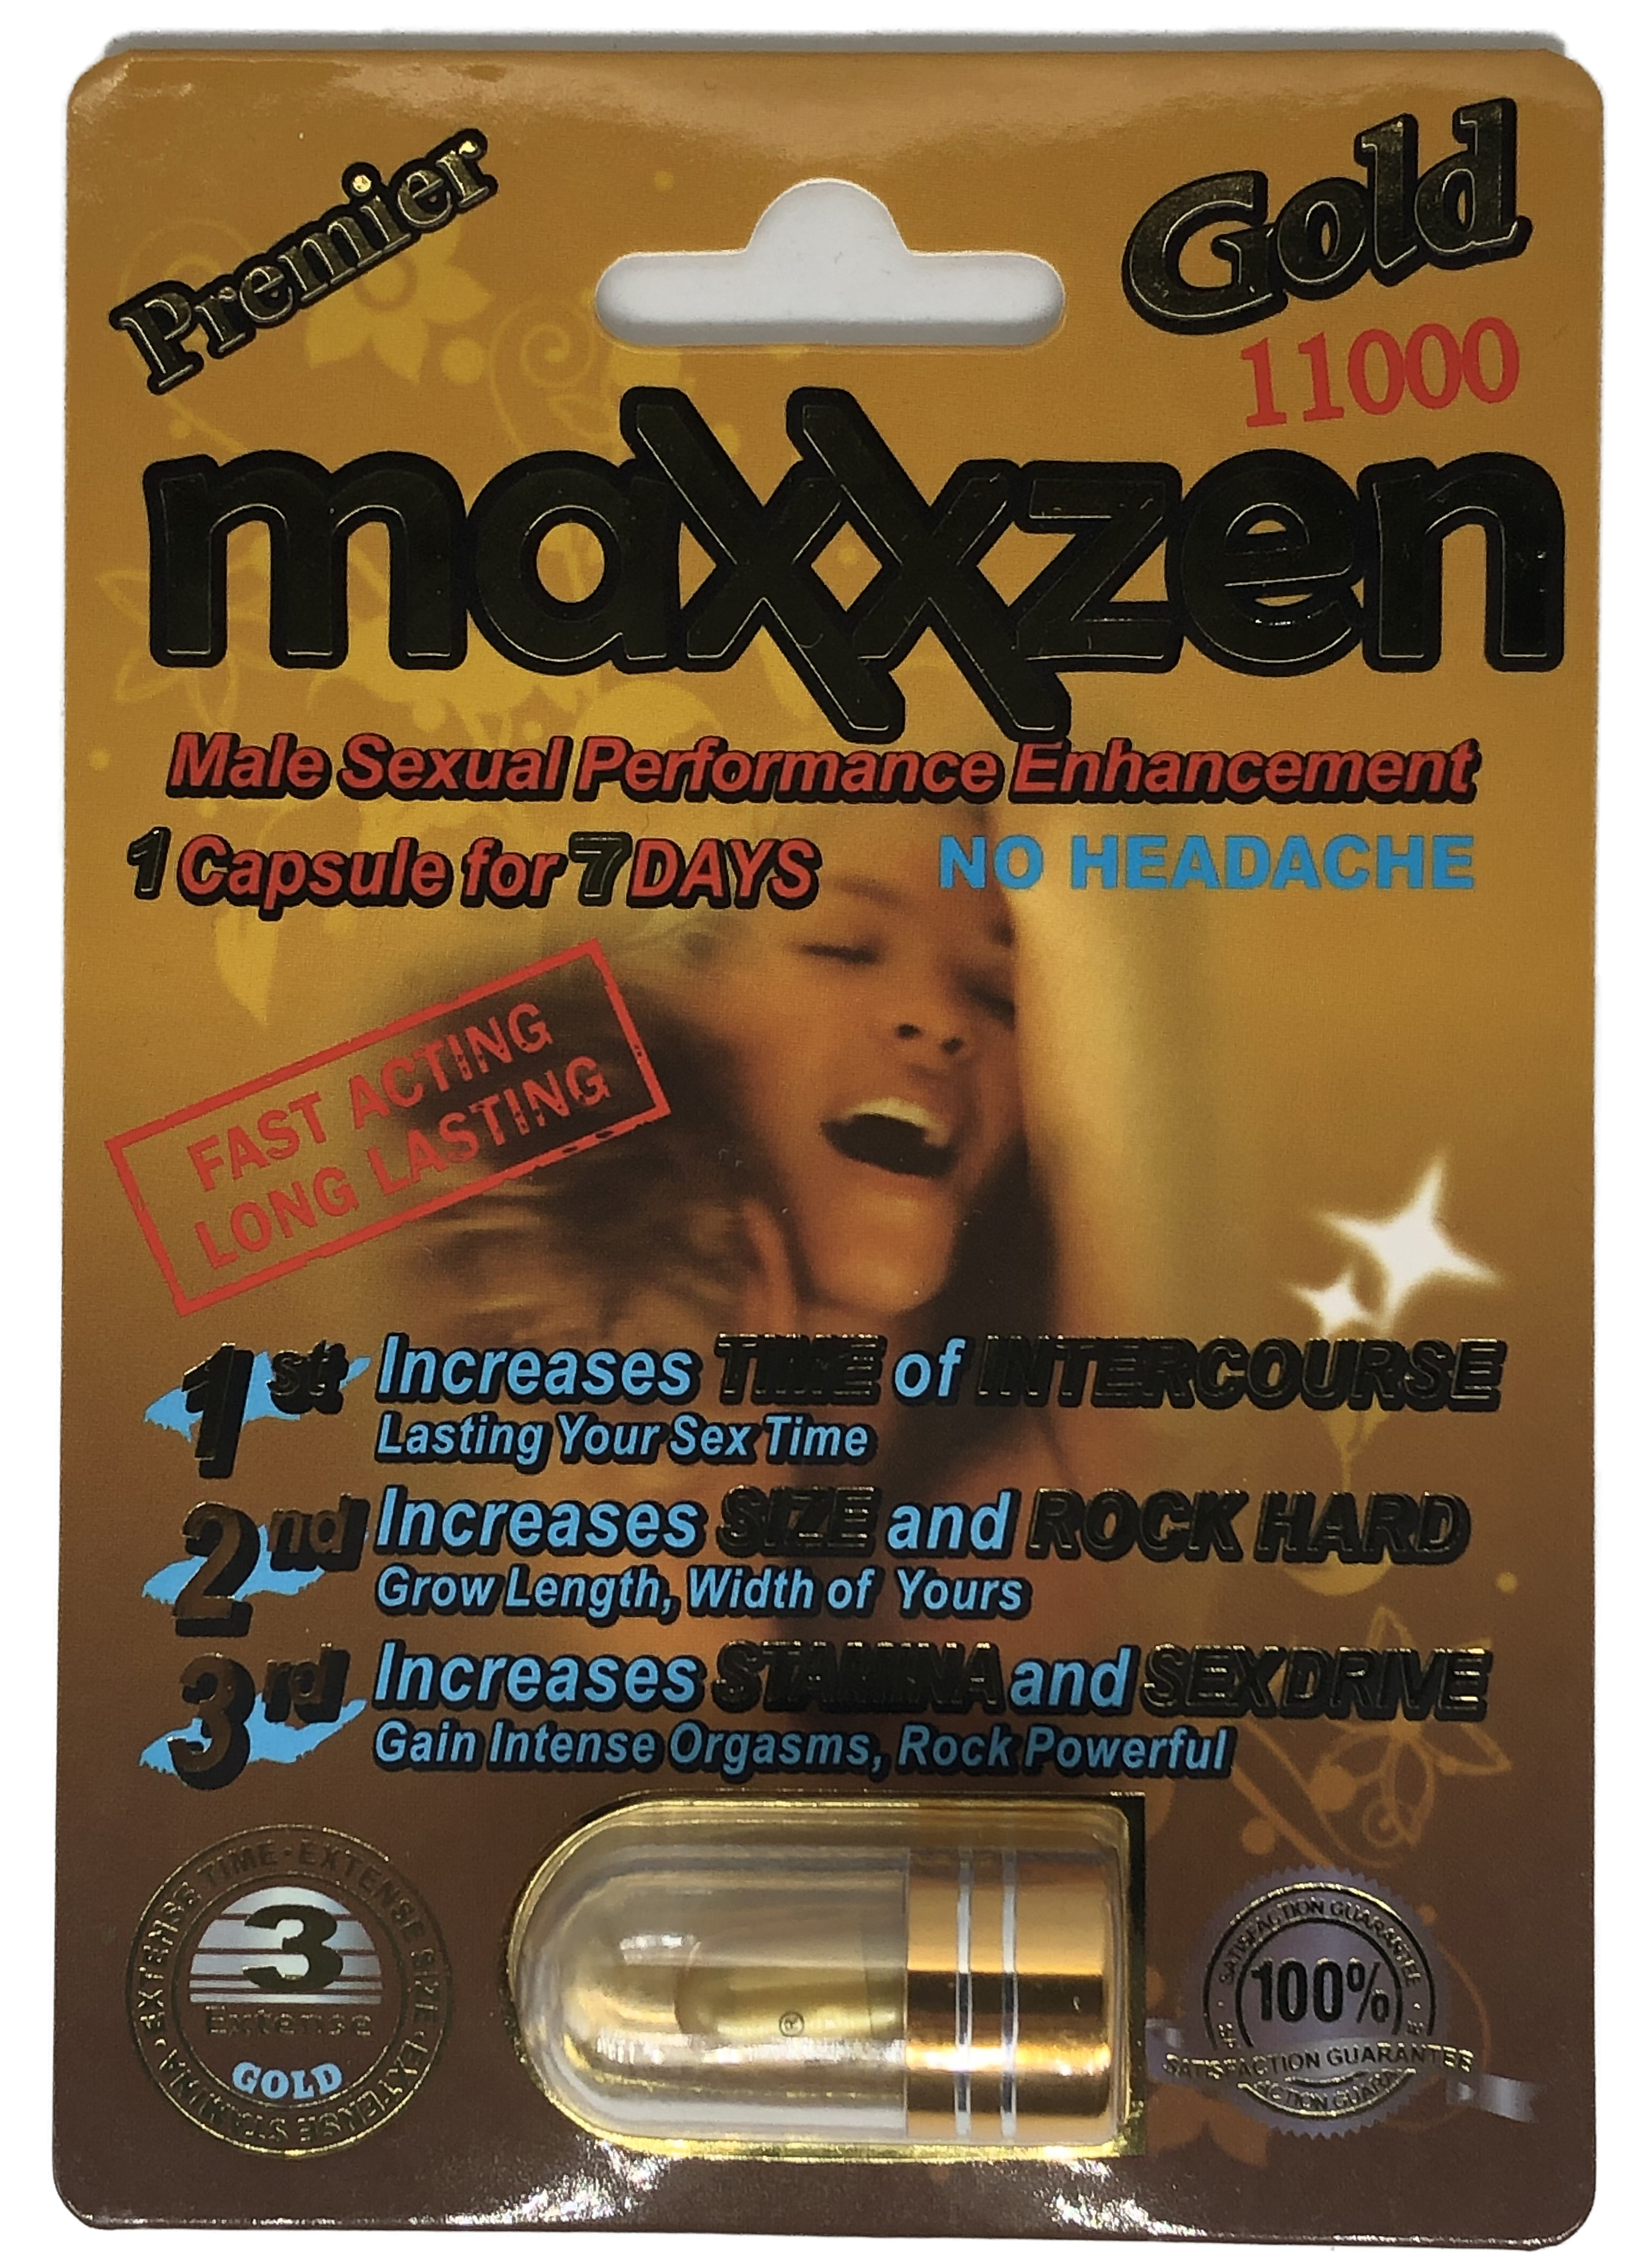 Maxxzen PREMIER Gold 11000 Male Sexual Enhancement Pill - Rhino 